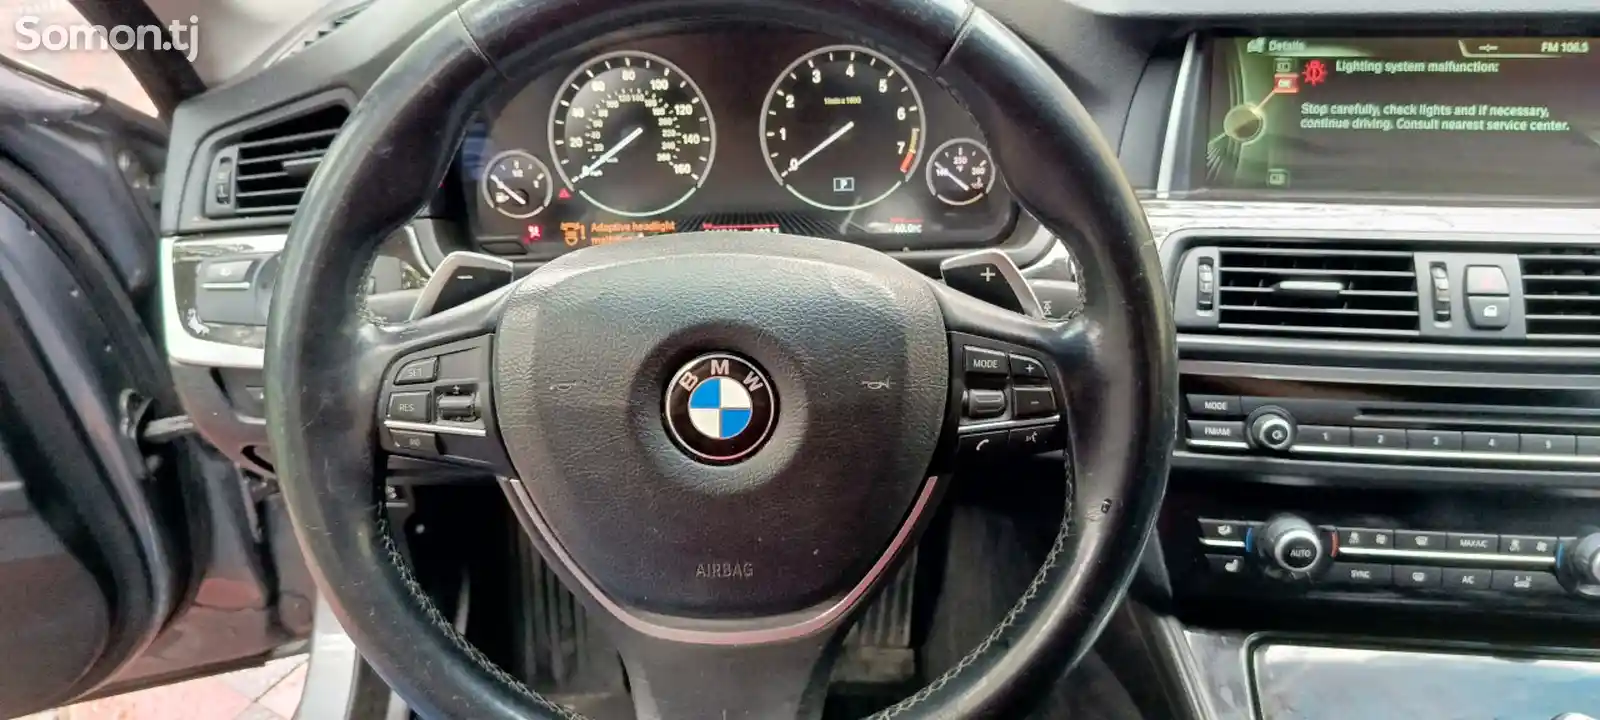 BMW 5 series, 2014-14